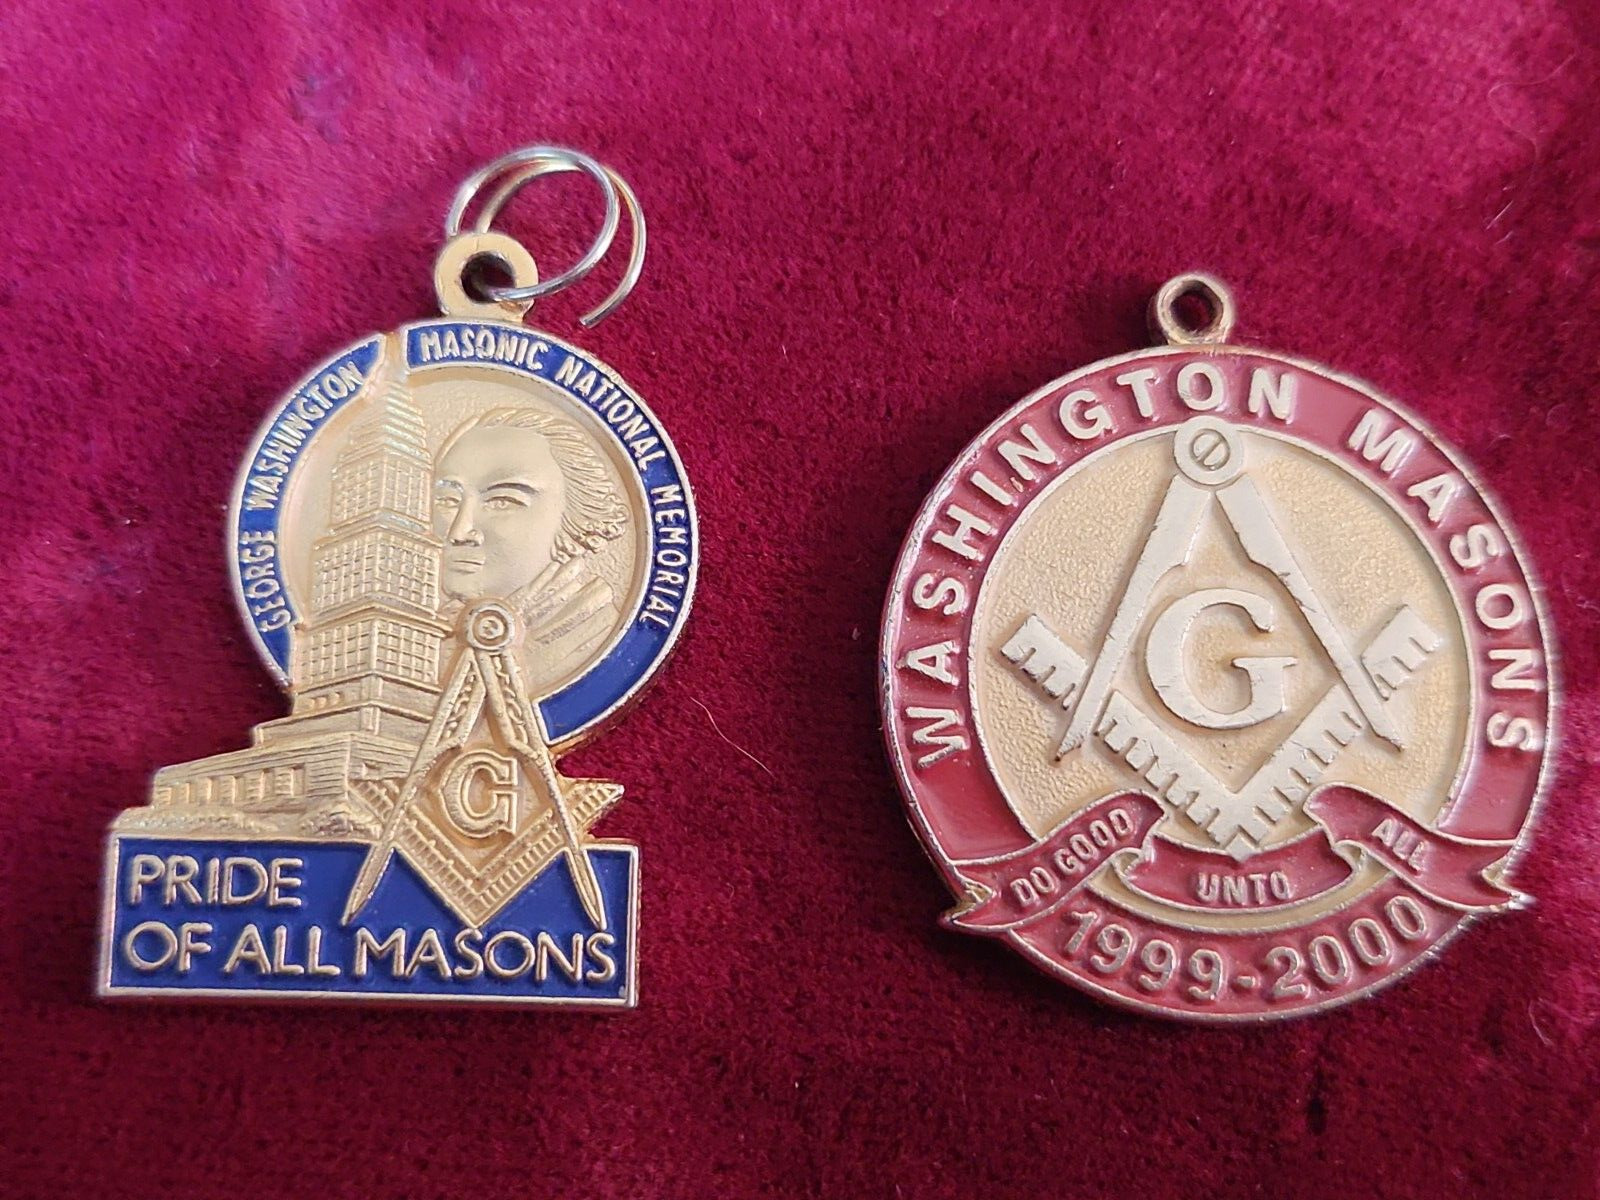 2 MASONS FOBS, MASONIC NATIONAL MEMORIAL PRIDE OF ALL MASONS +WA Masons 1999